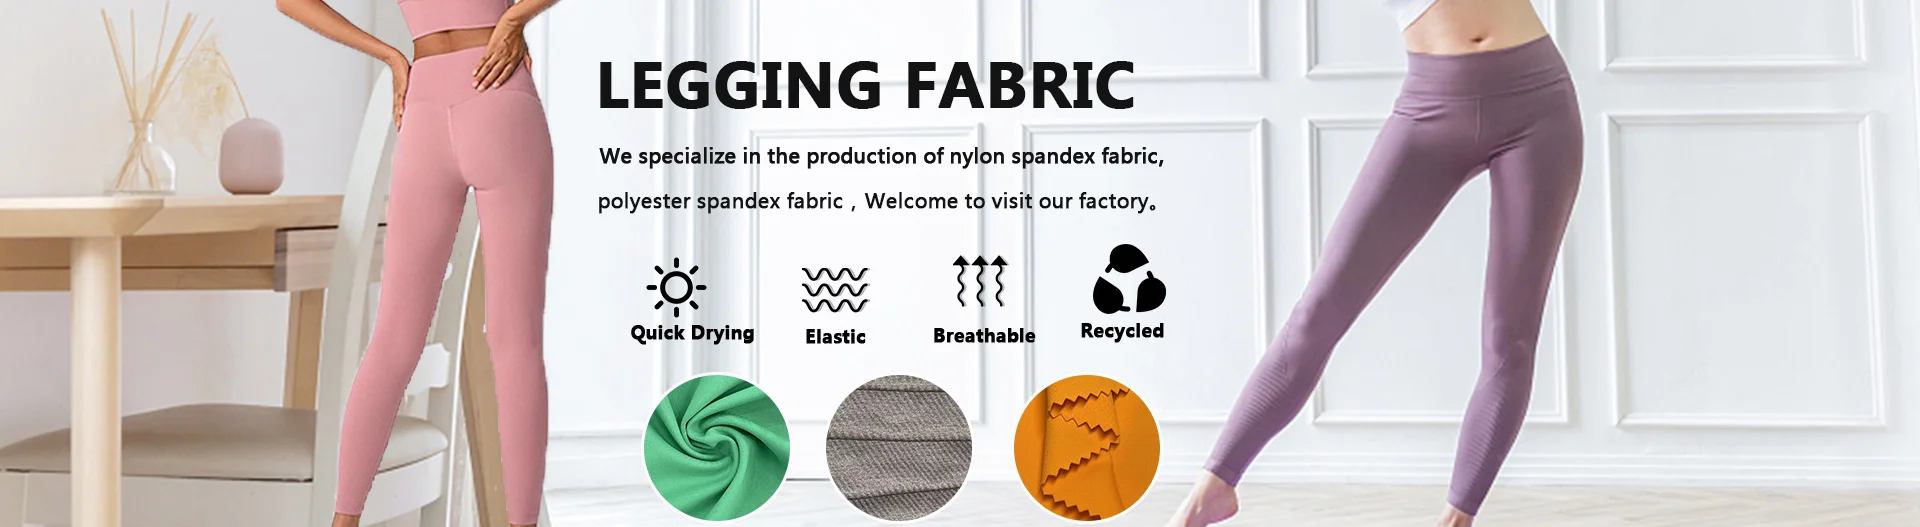 Suzhou Coil Textile Tech Co., Ltd. - Knitting Functional Fabric/Spandex ...